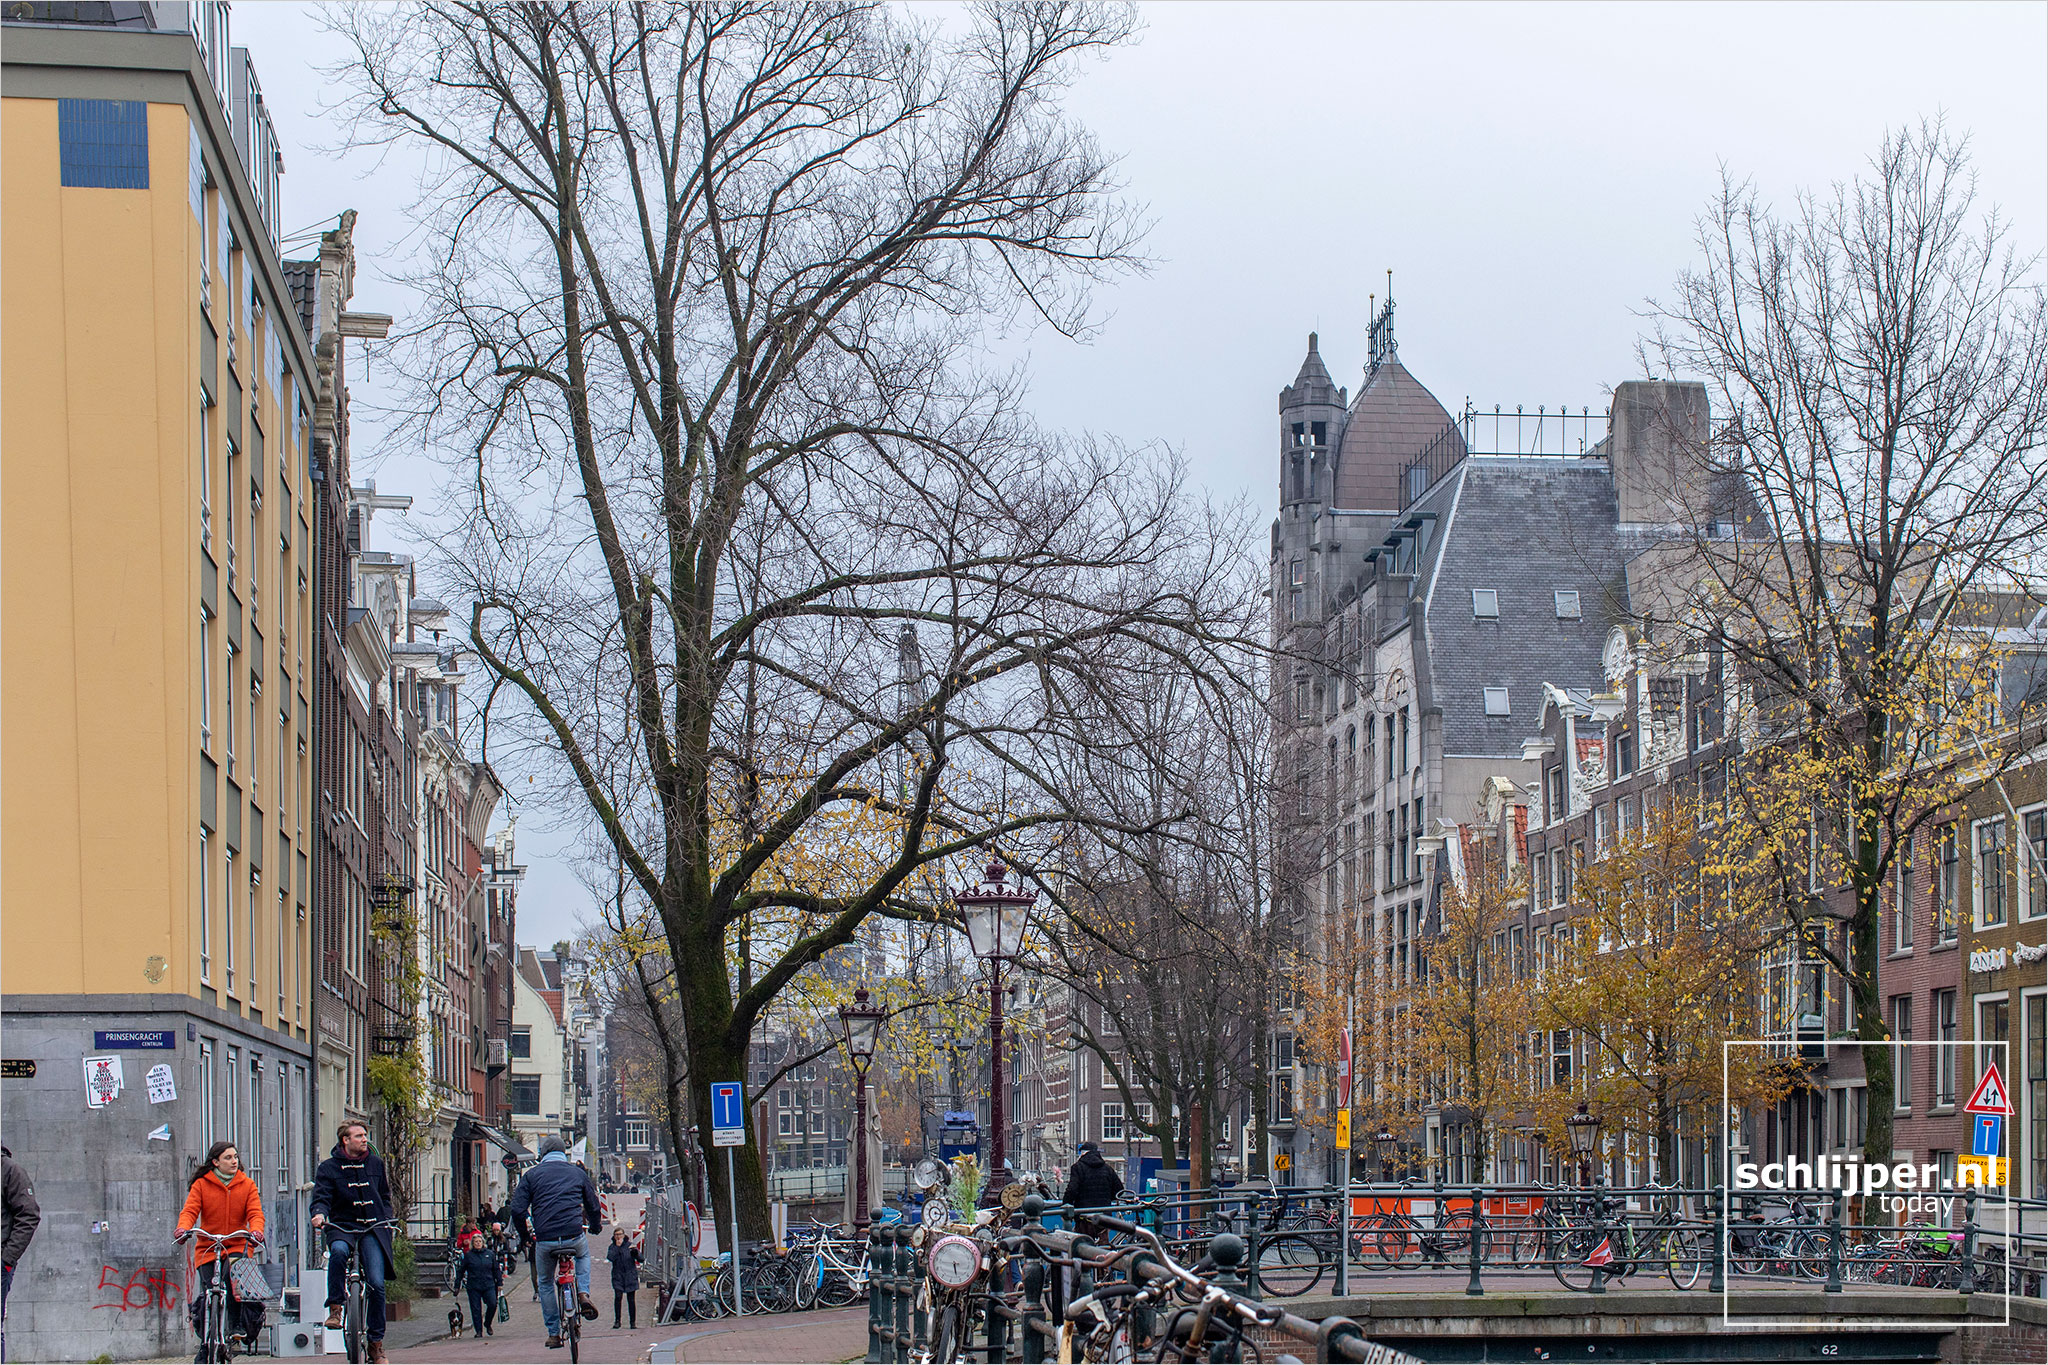 The Netherlands, Amsterdam, 6 december 2020